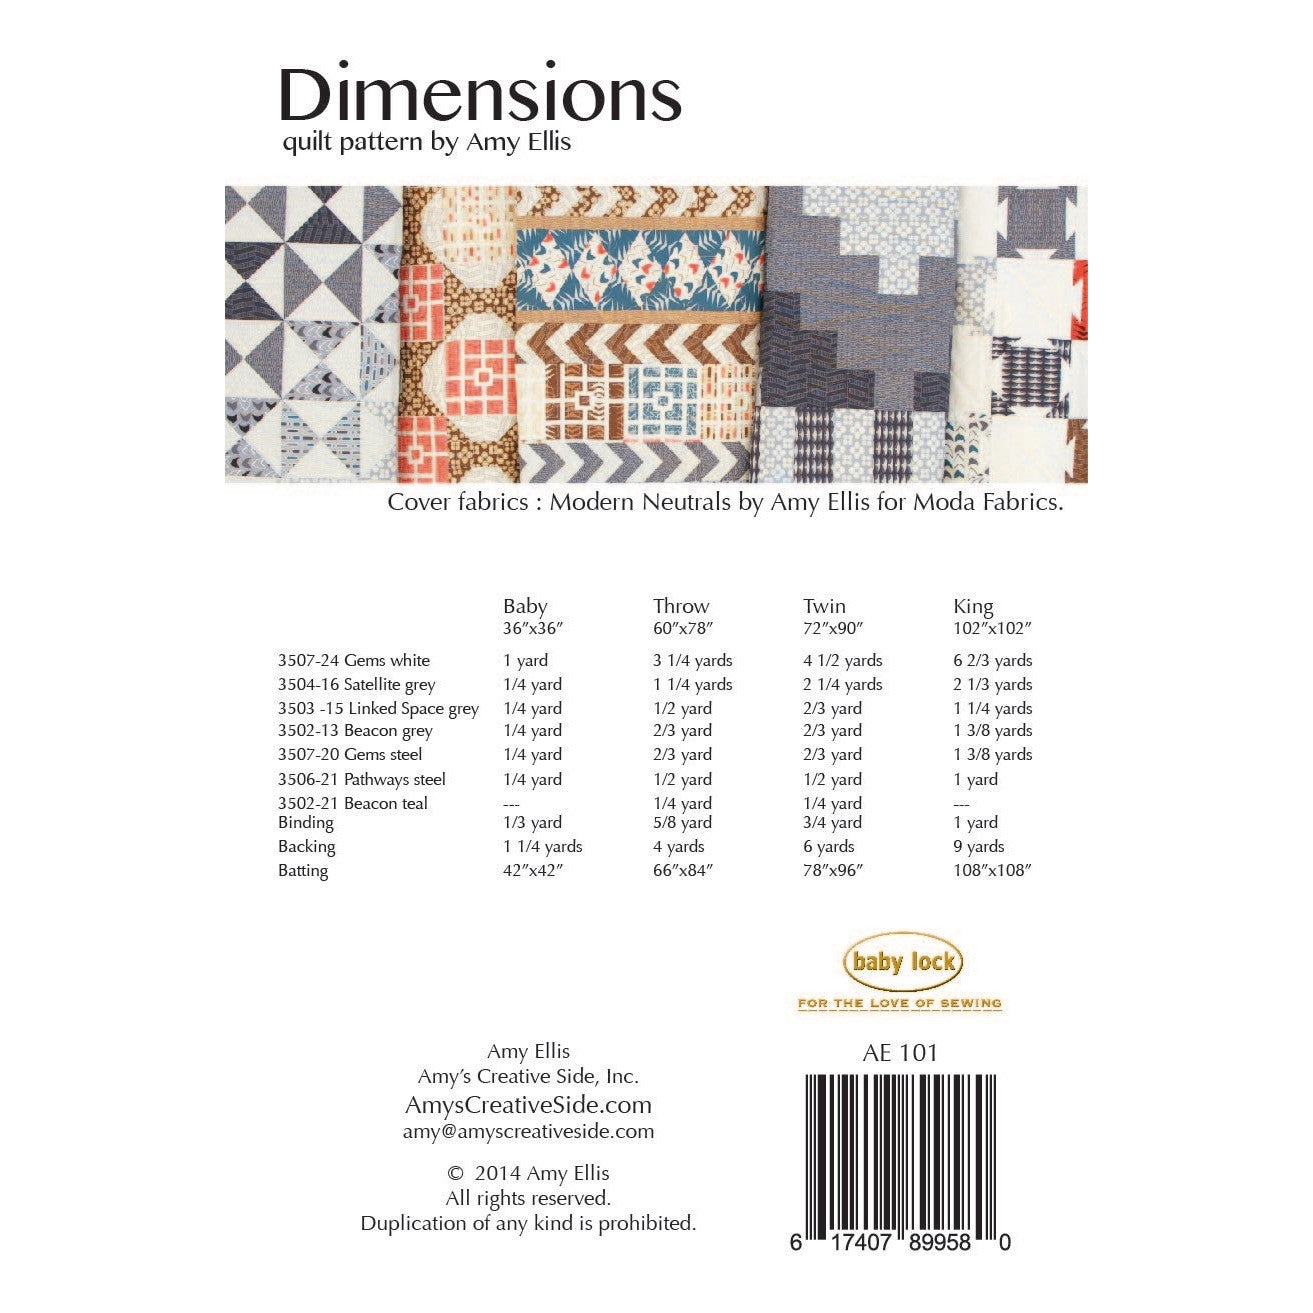 Dimensions by Amy Ellis